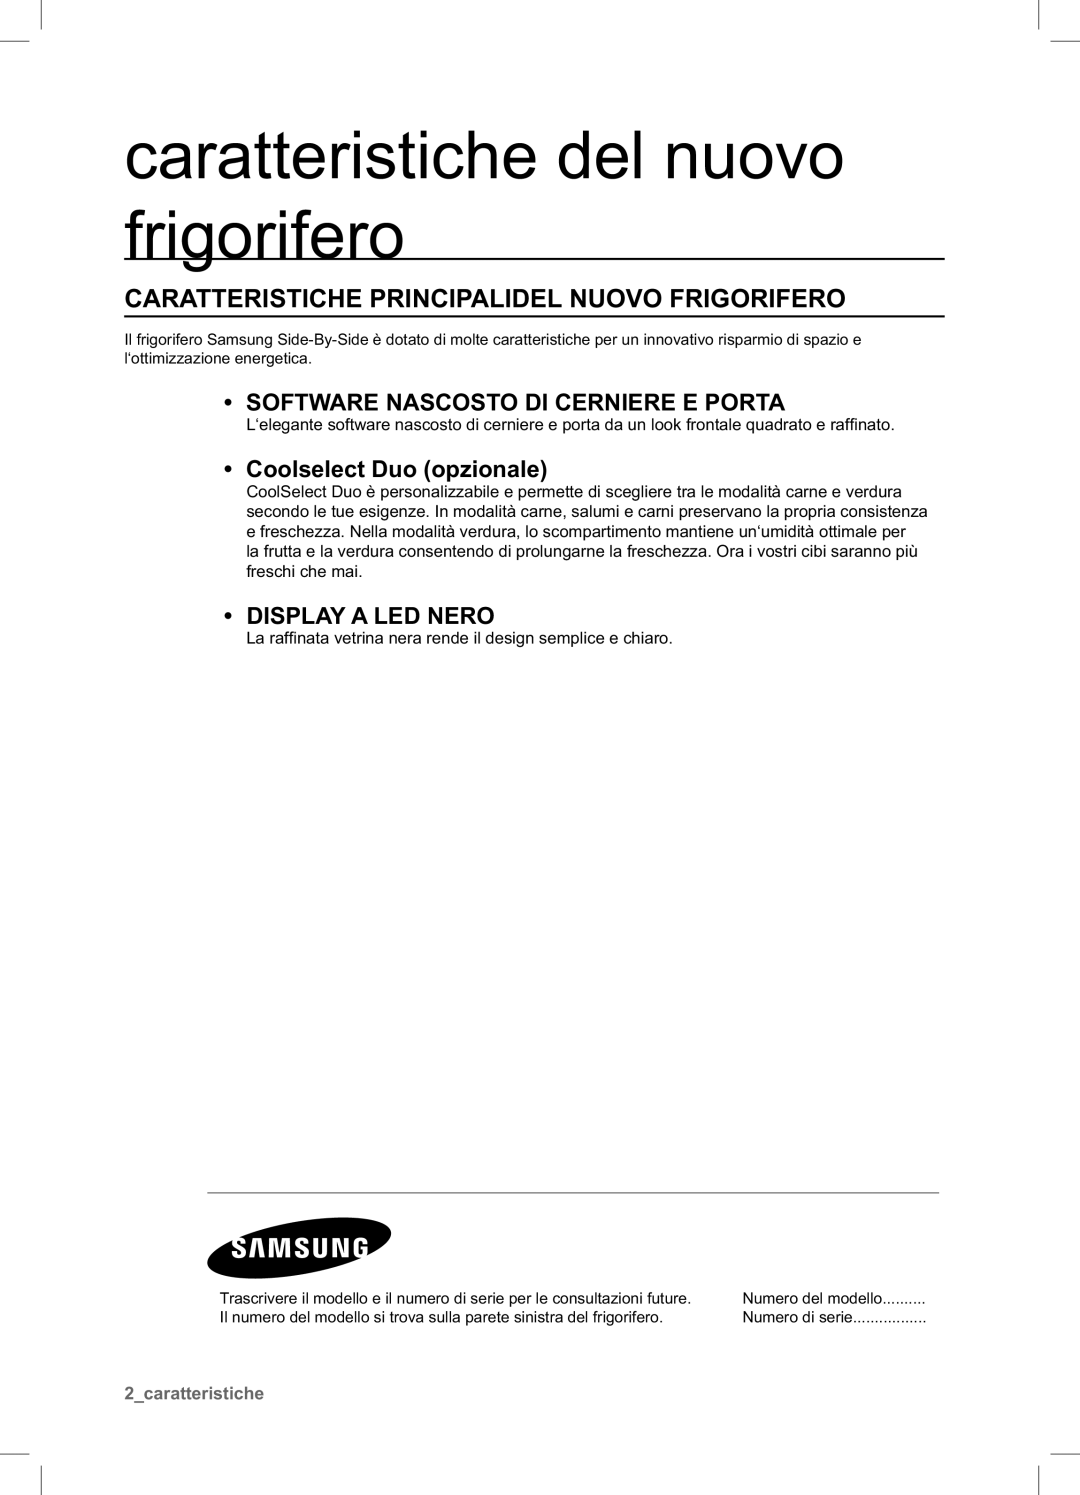 Samsung RSA1STTS1/XES, RSA1ZTTS1/XES manual Caratteristiche Principalidel Nuovo Frigorifero, Coolselect Duo opzionale 